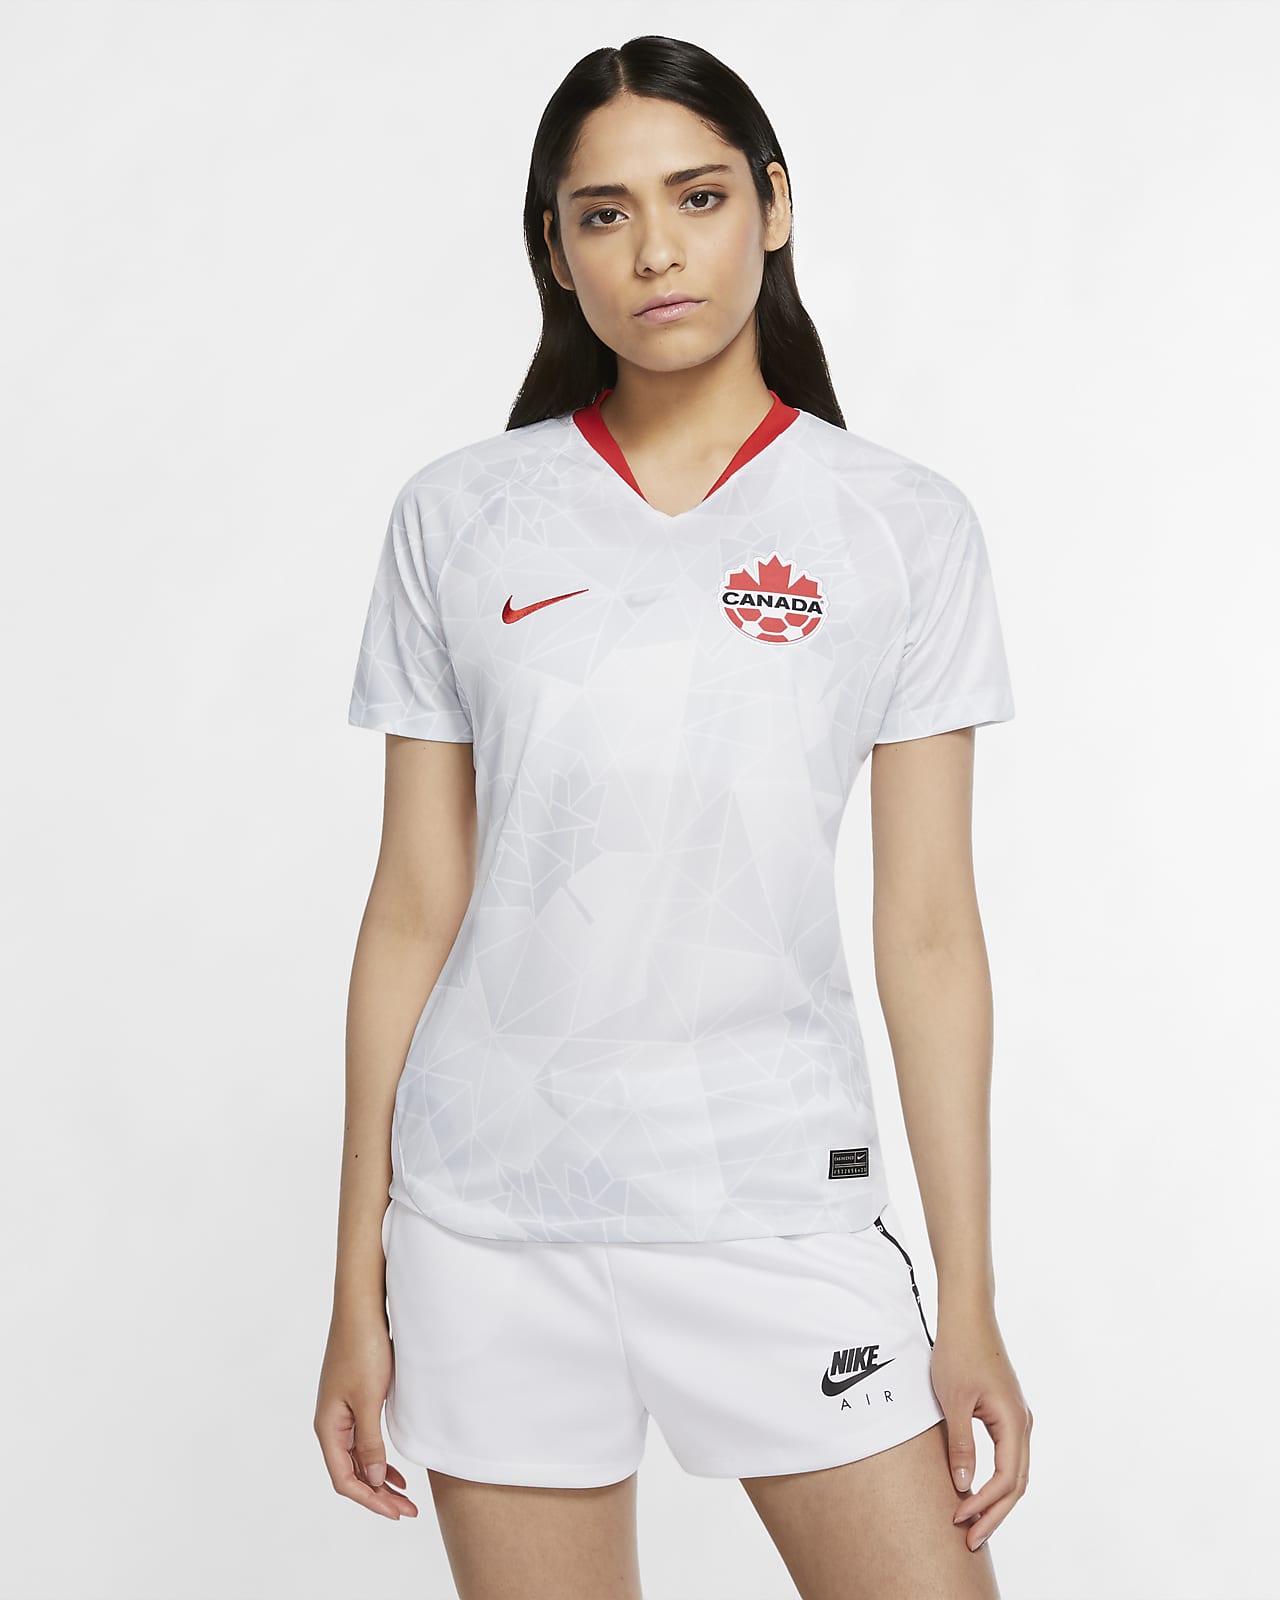 Canada Women's Soccer / Canada vs. Brazil: Tokyo 2020 Olympic Women's ...